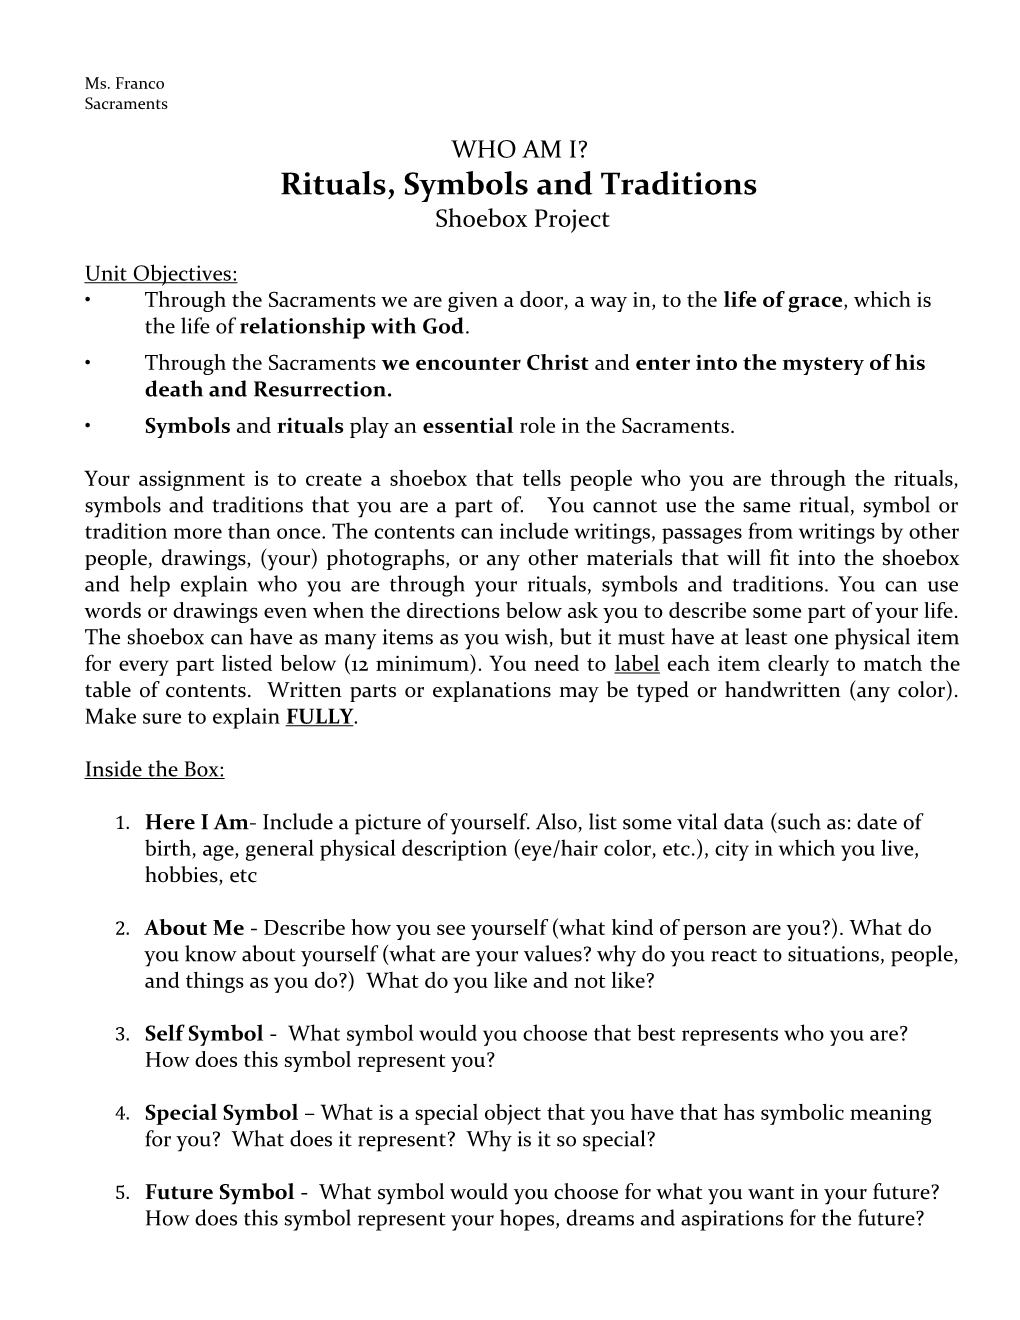 Rituals, Symbols and Traditions